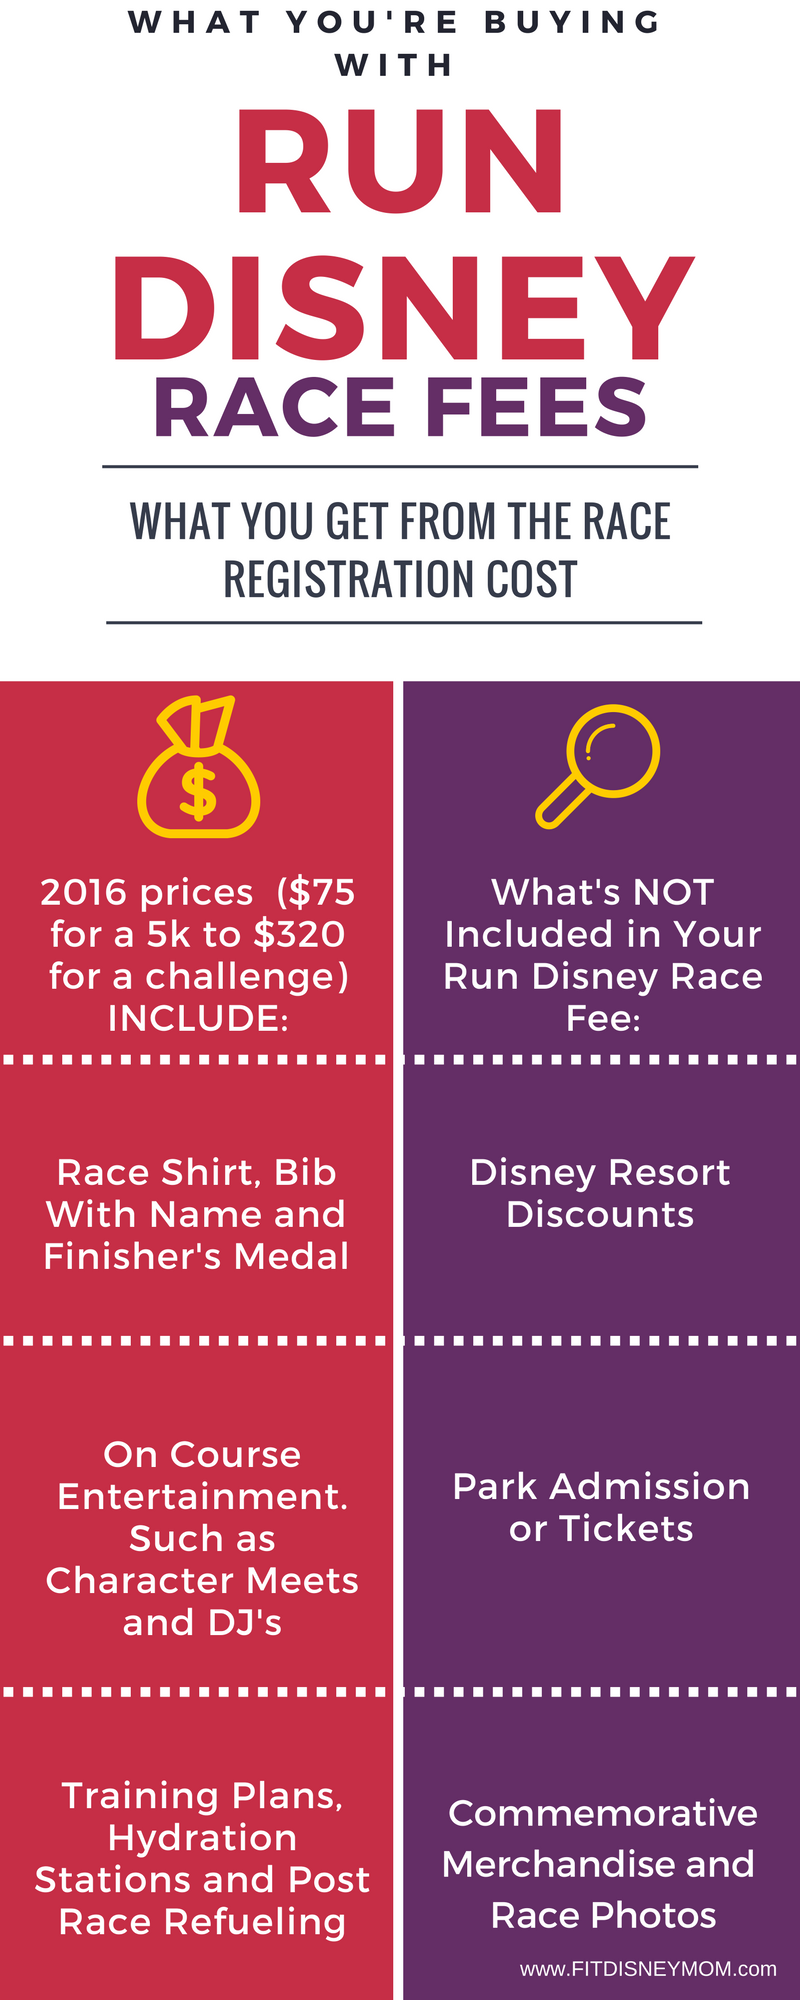 Run Disney Race Registration Fees